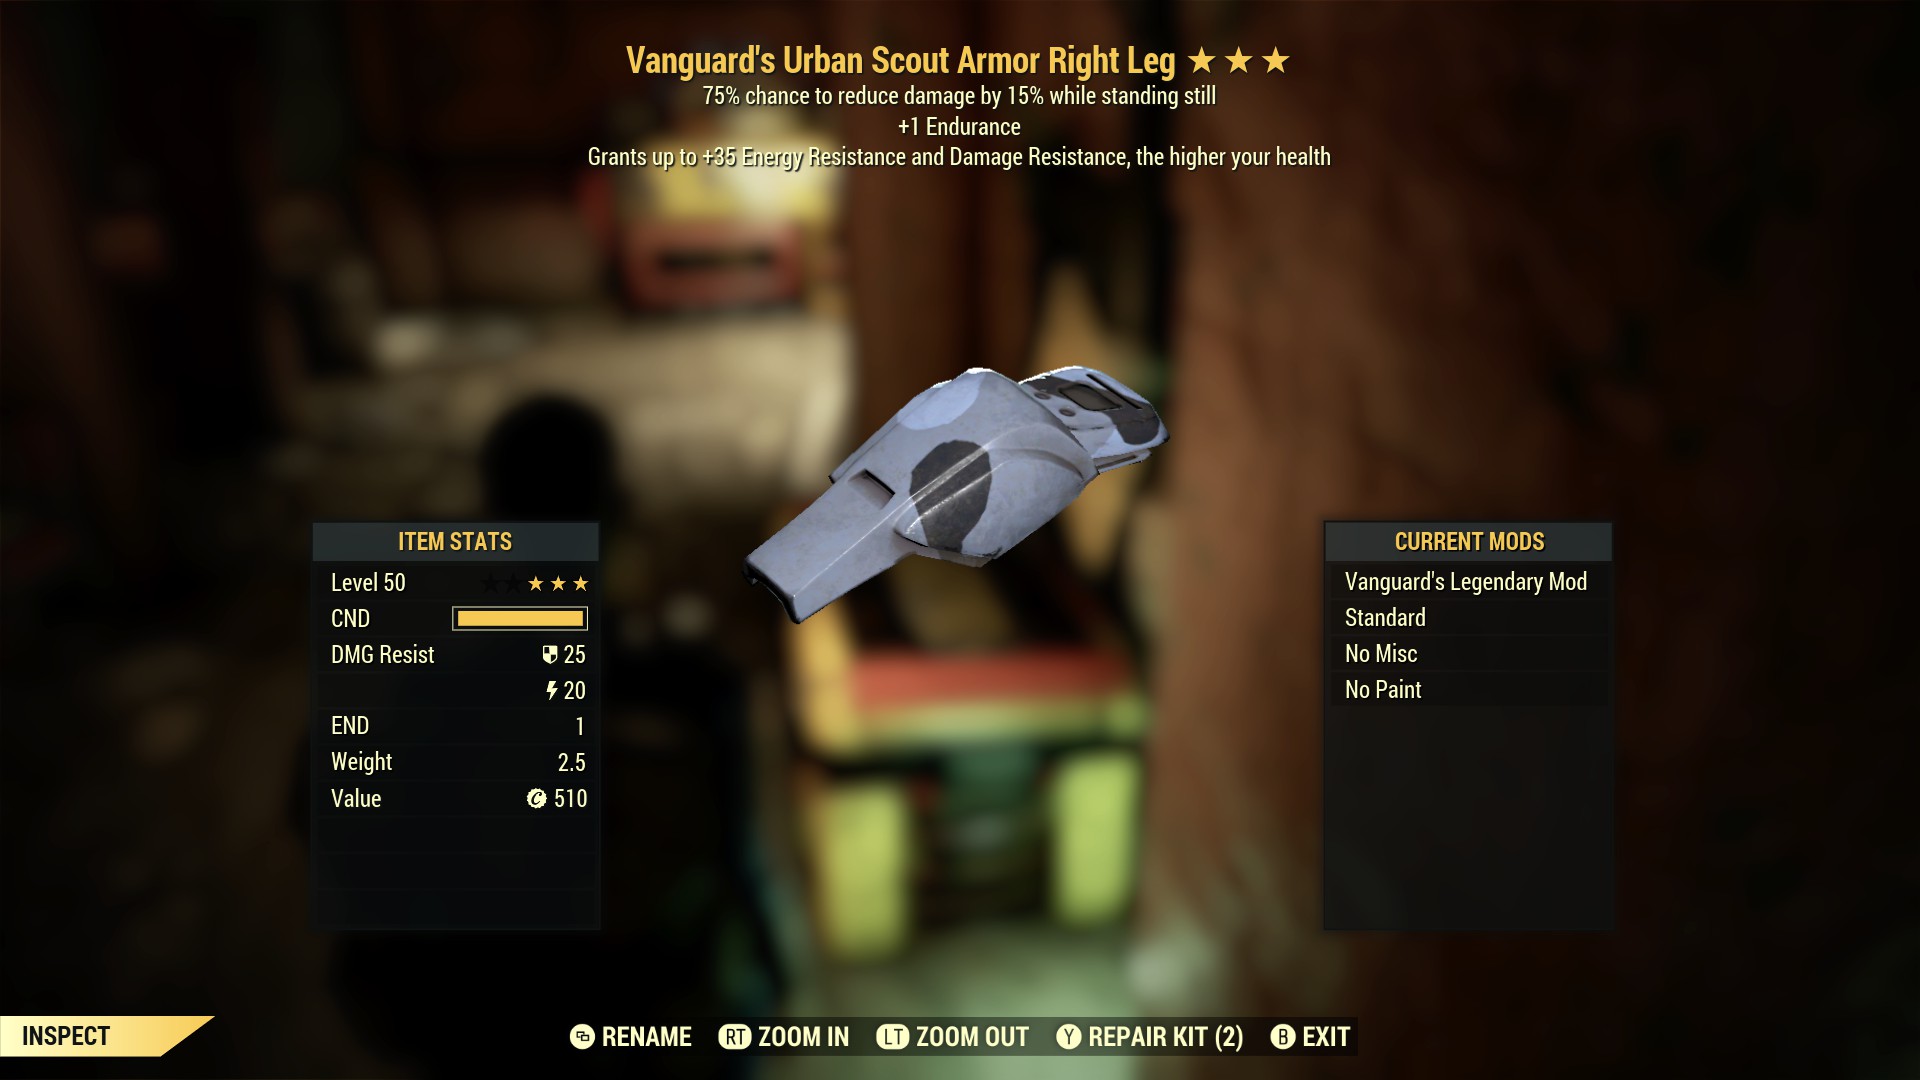 Vanguard's Urban Scout Armor Right Leg